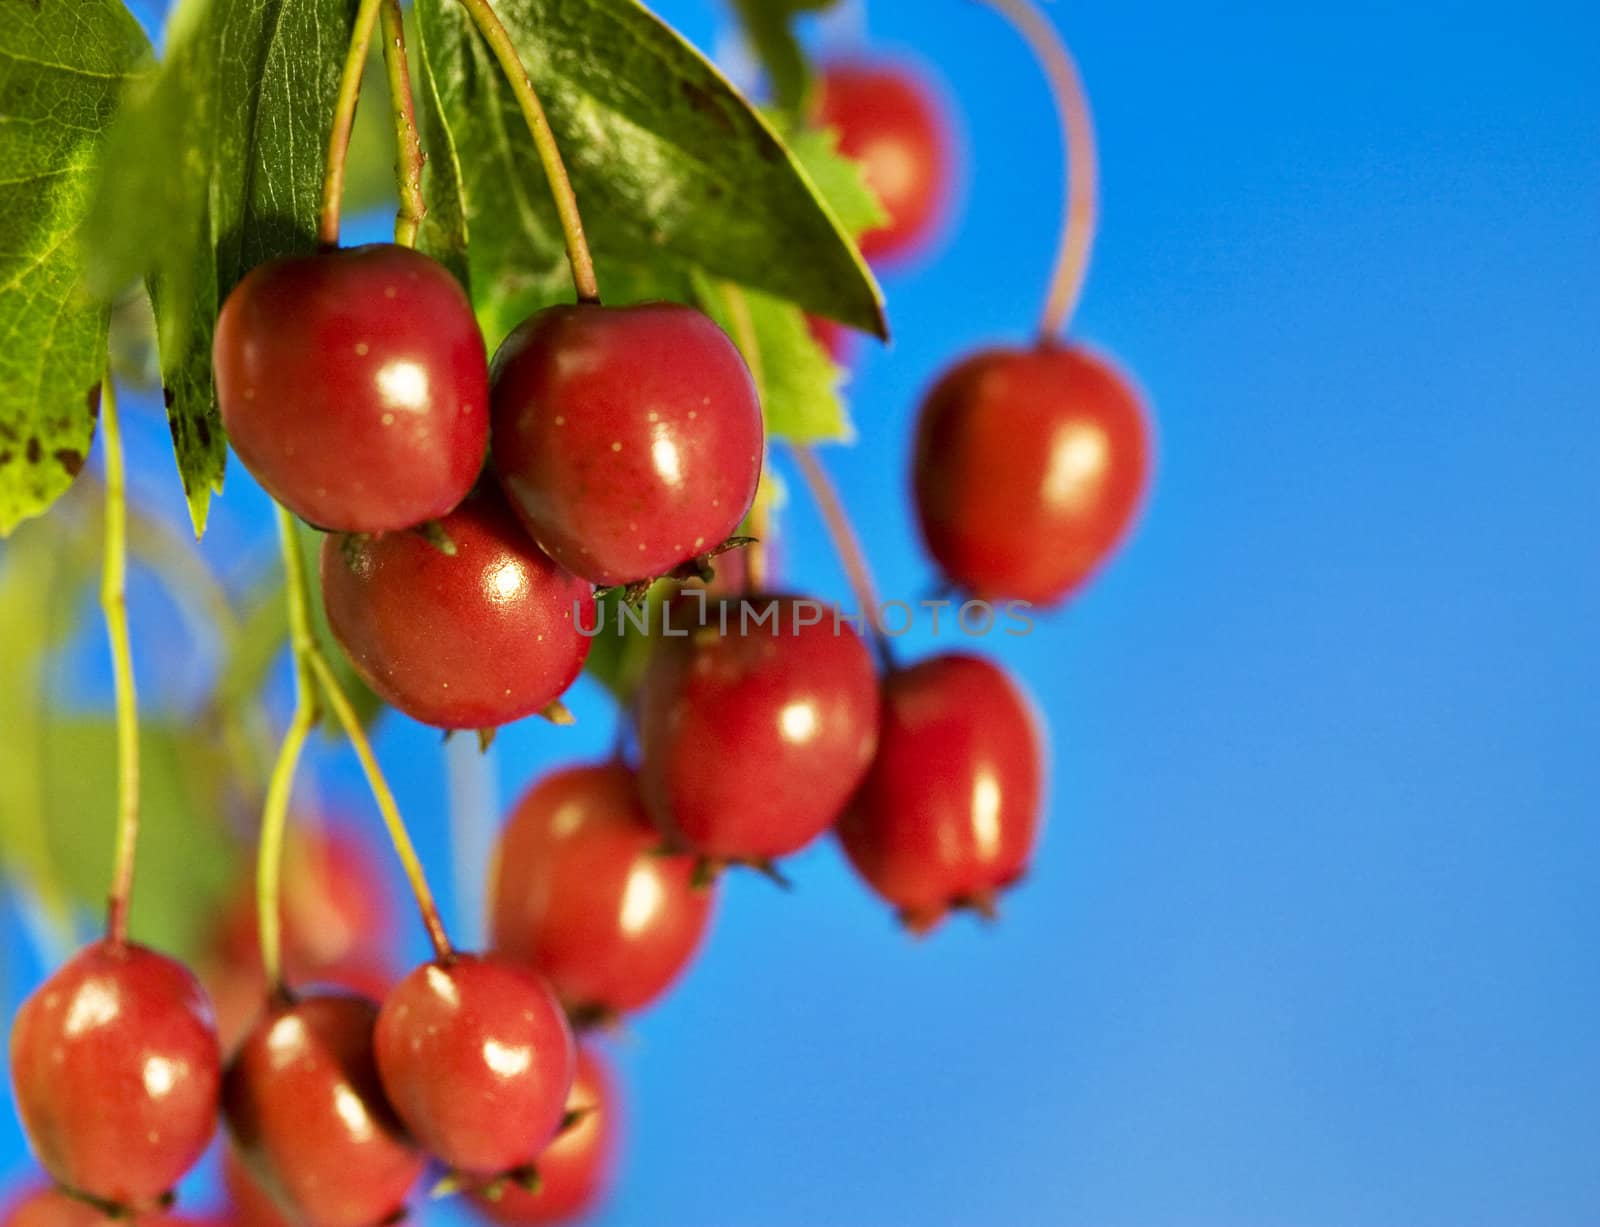 Rowan berries in the fall